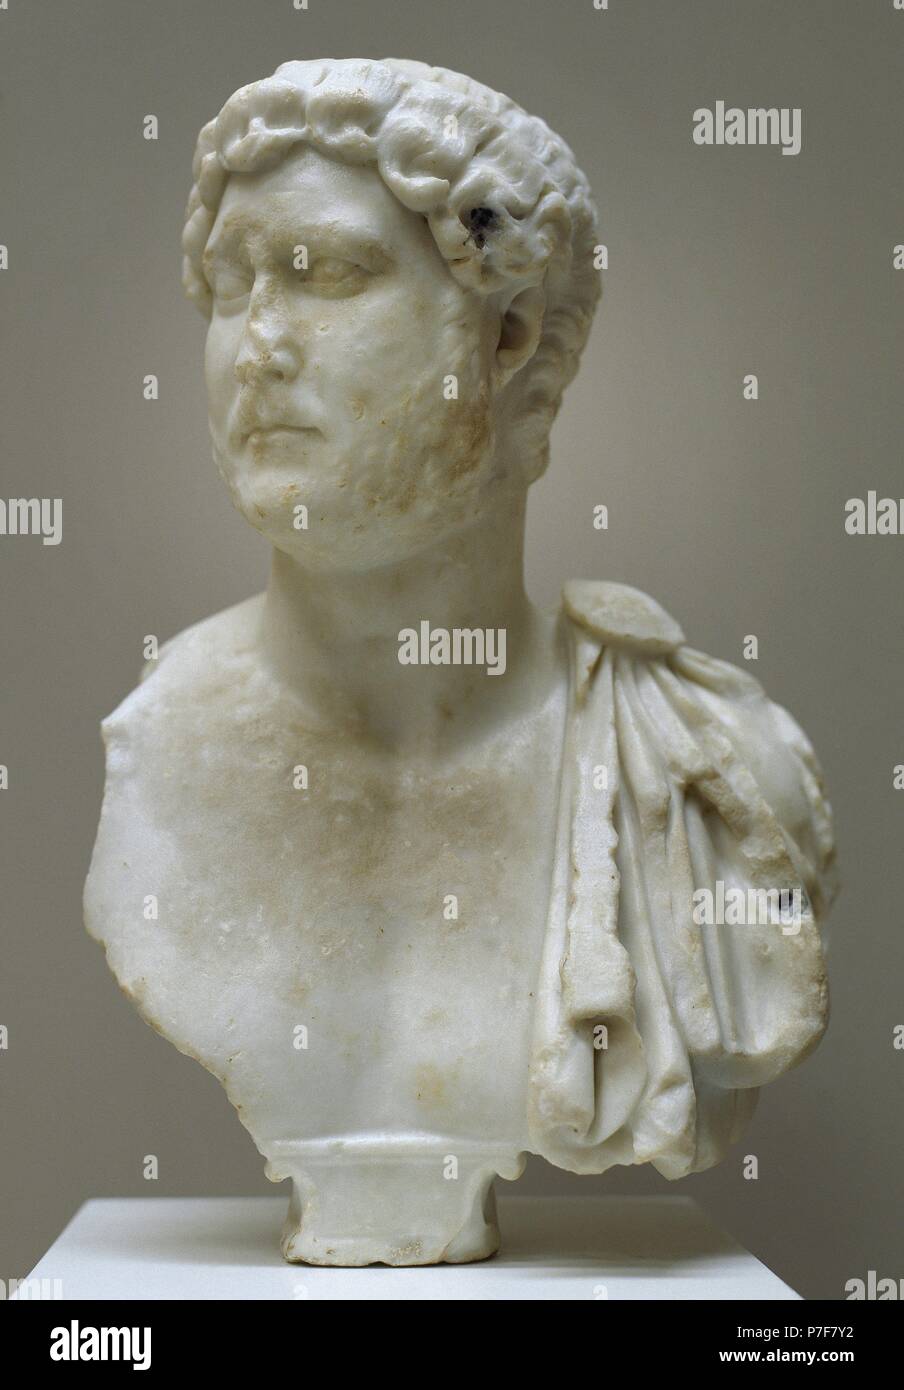 Hadrian (76-138). Roman emperor from 117-138. Bust. From Milrreo Estoi, Faro, Portugal. Infante Dom Henrique Archaeological Museum. Faro. Portugal. Stock Photo